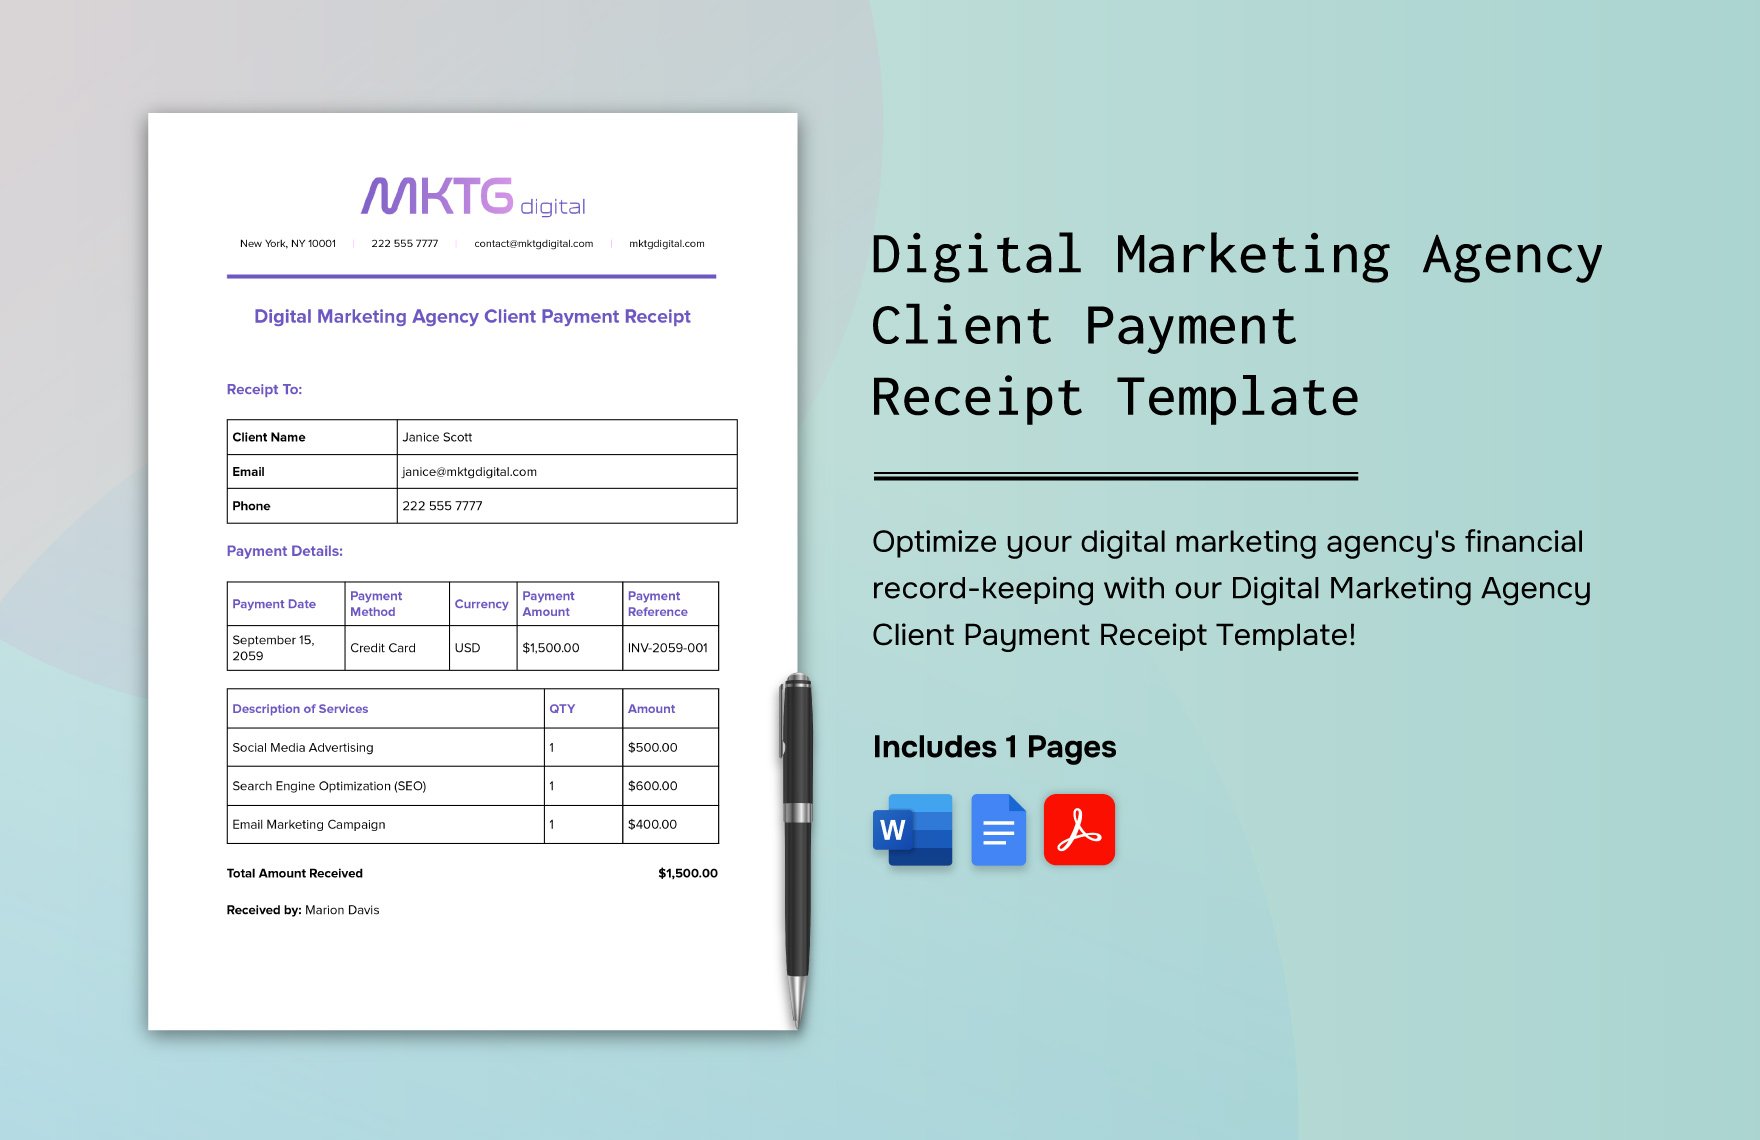 Digital Marketing Agency Client Payment Receipt Template